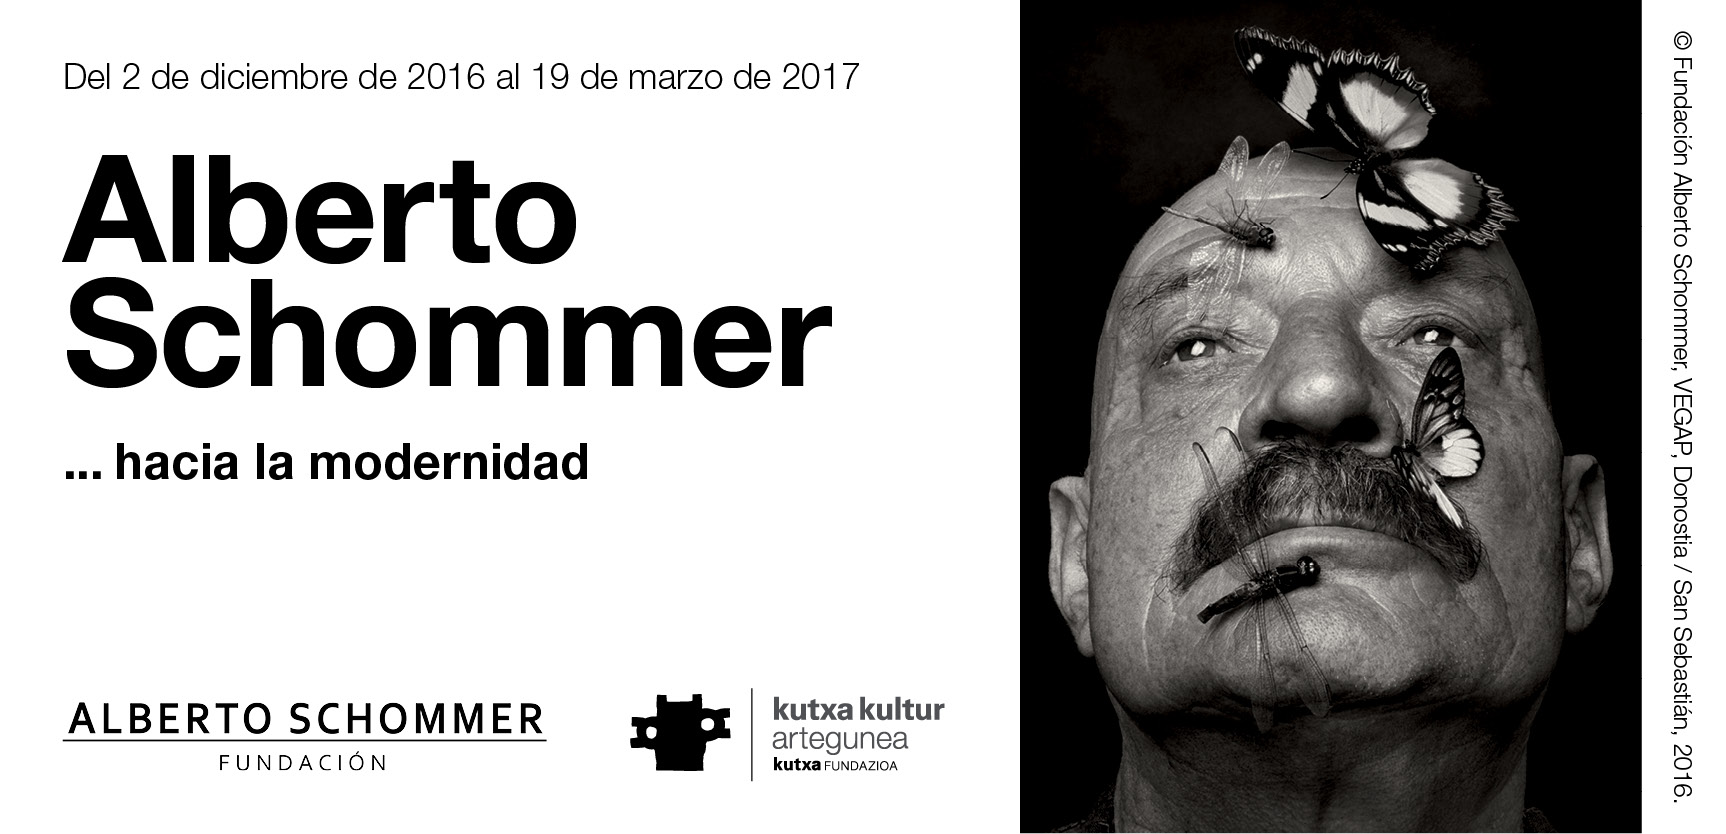 Kutxa Kultur Artegunea. Alberto Schommer …hacia la modernidad